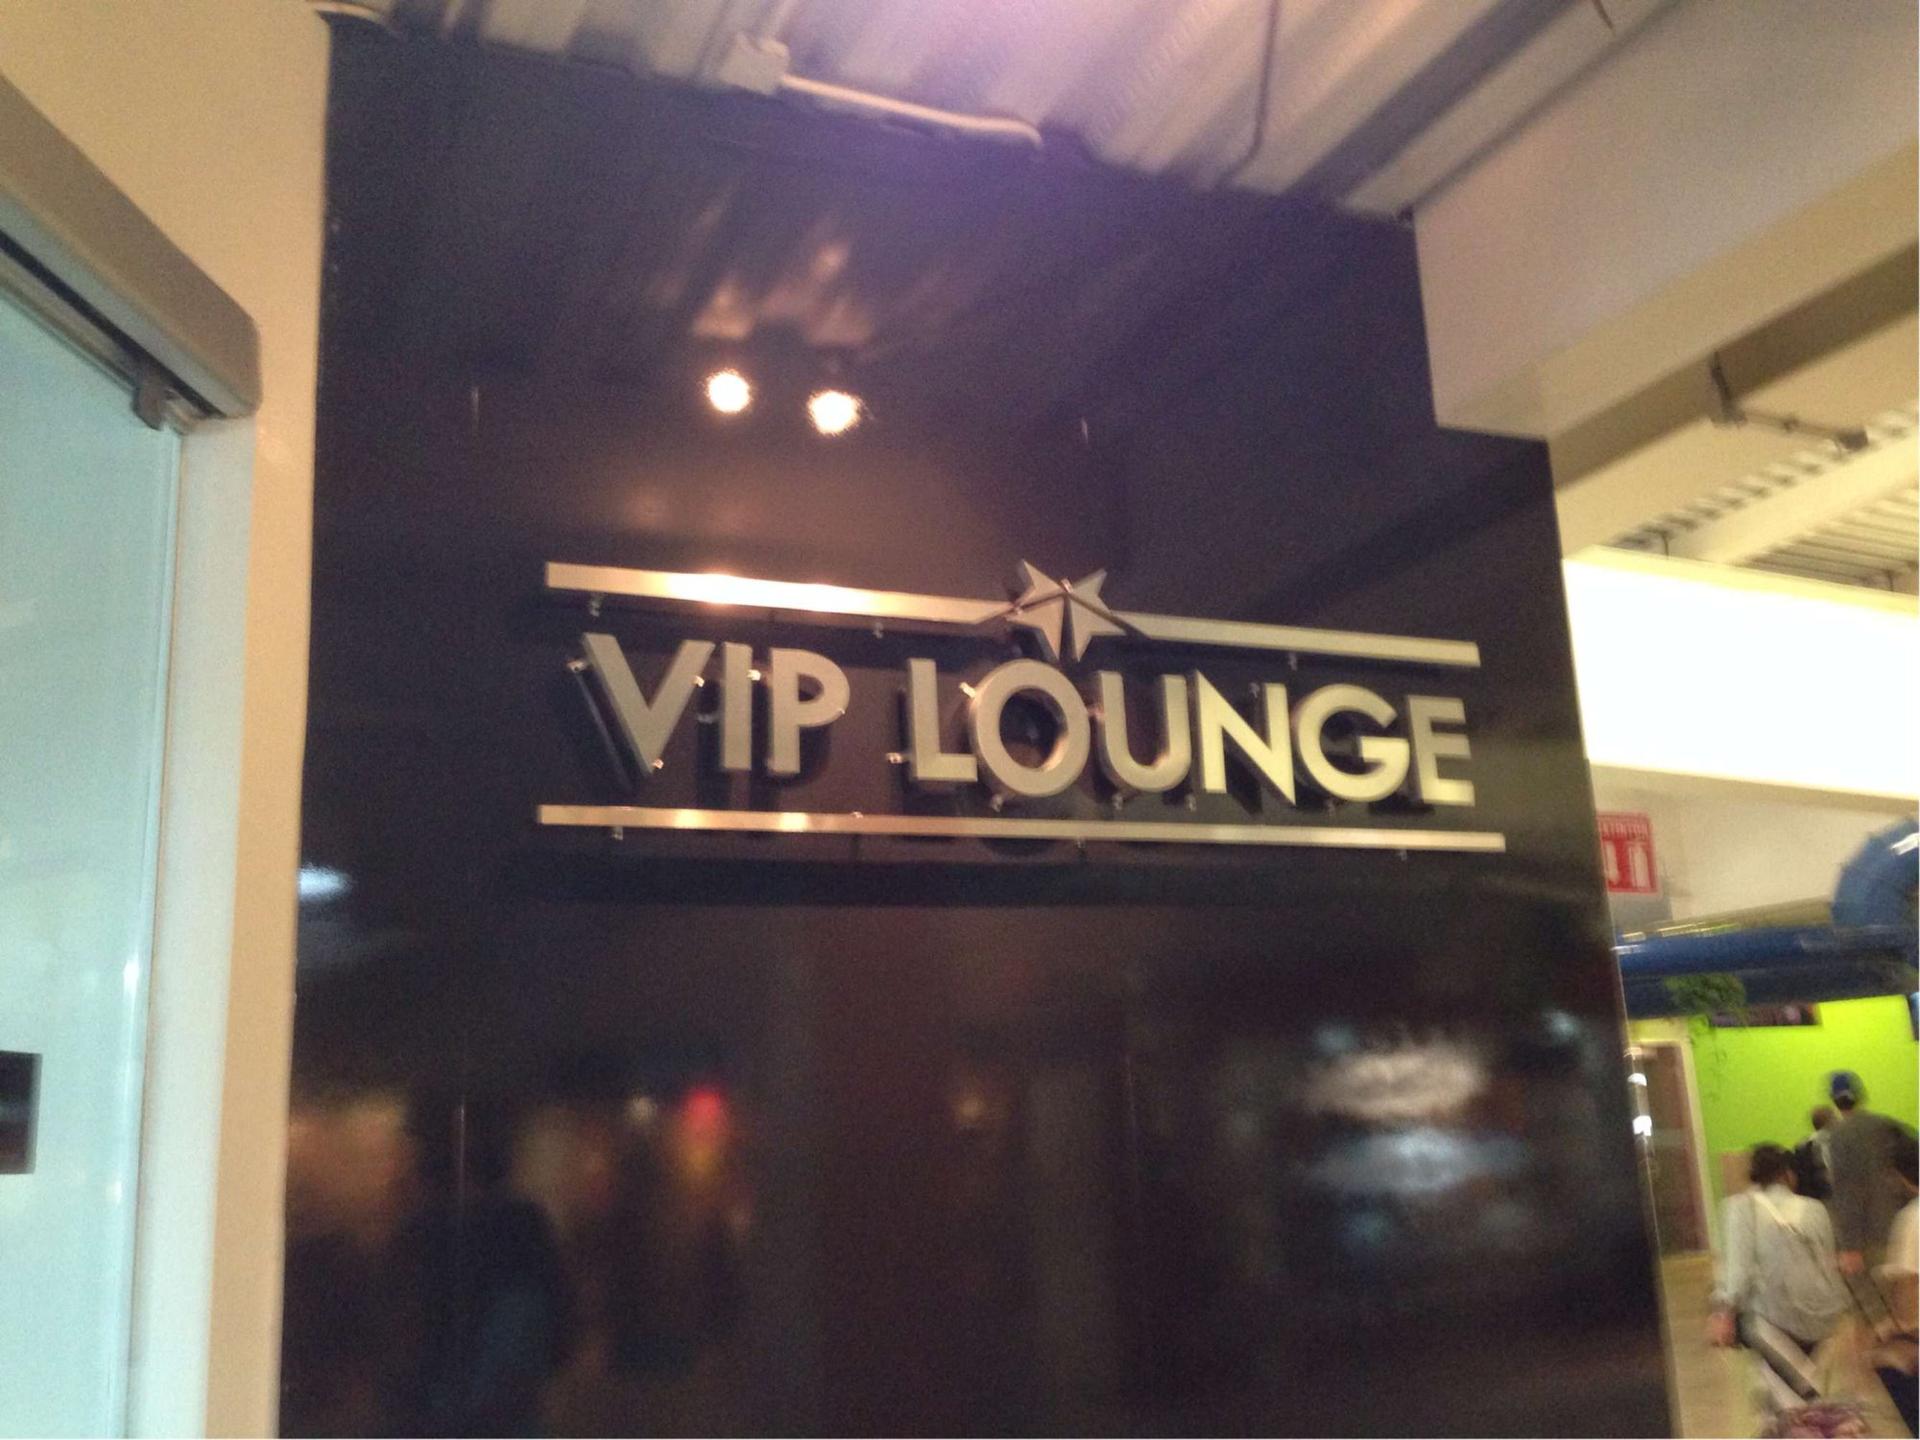 VIP Lounge image 24 of 29